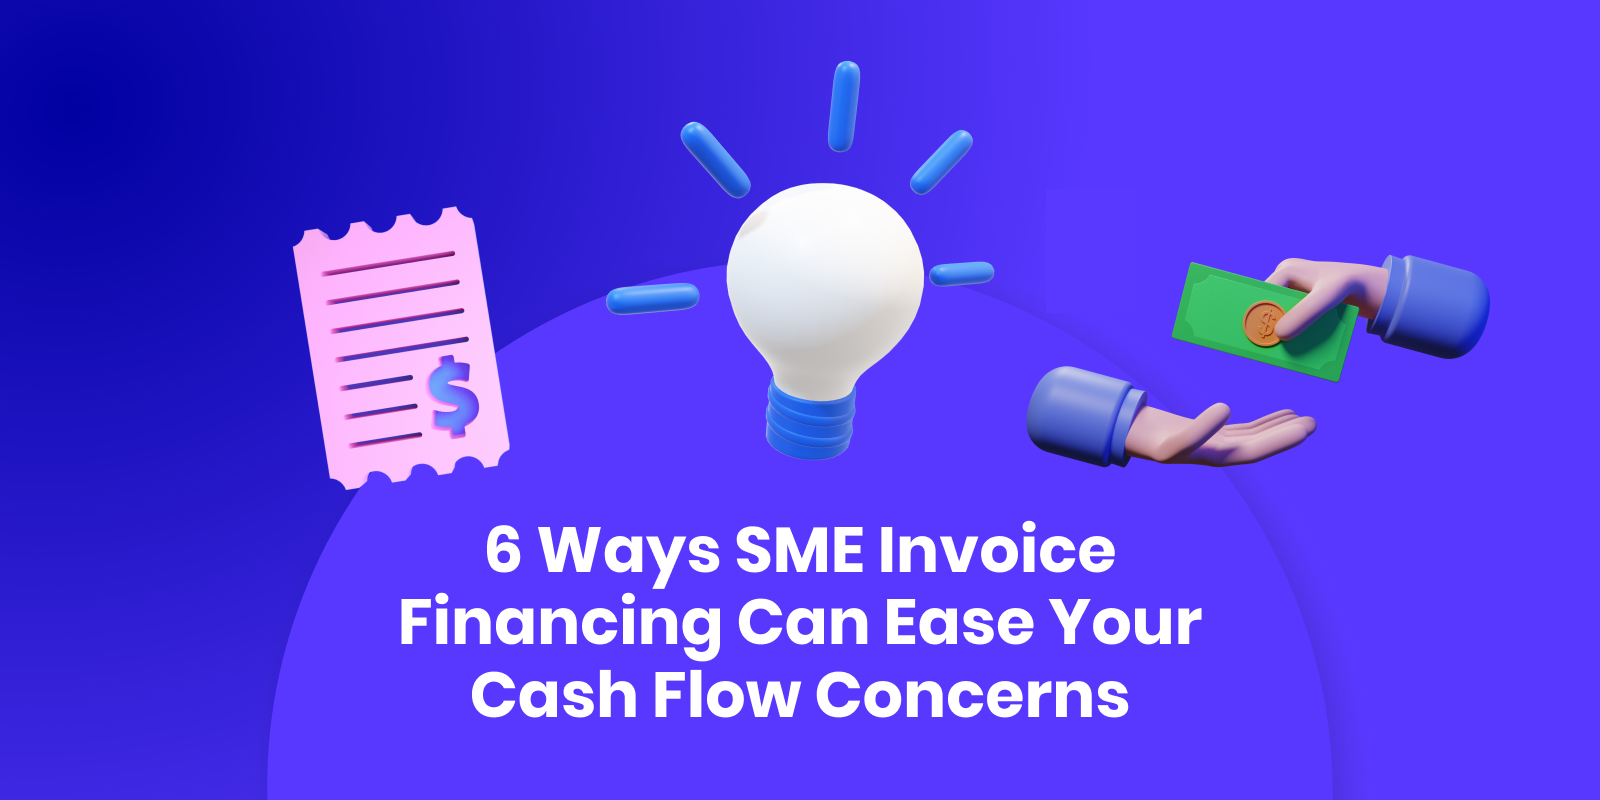 SME Invoice Financing for Cash Flow Problems - Blog